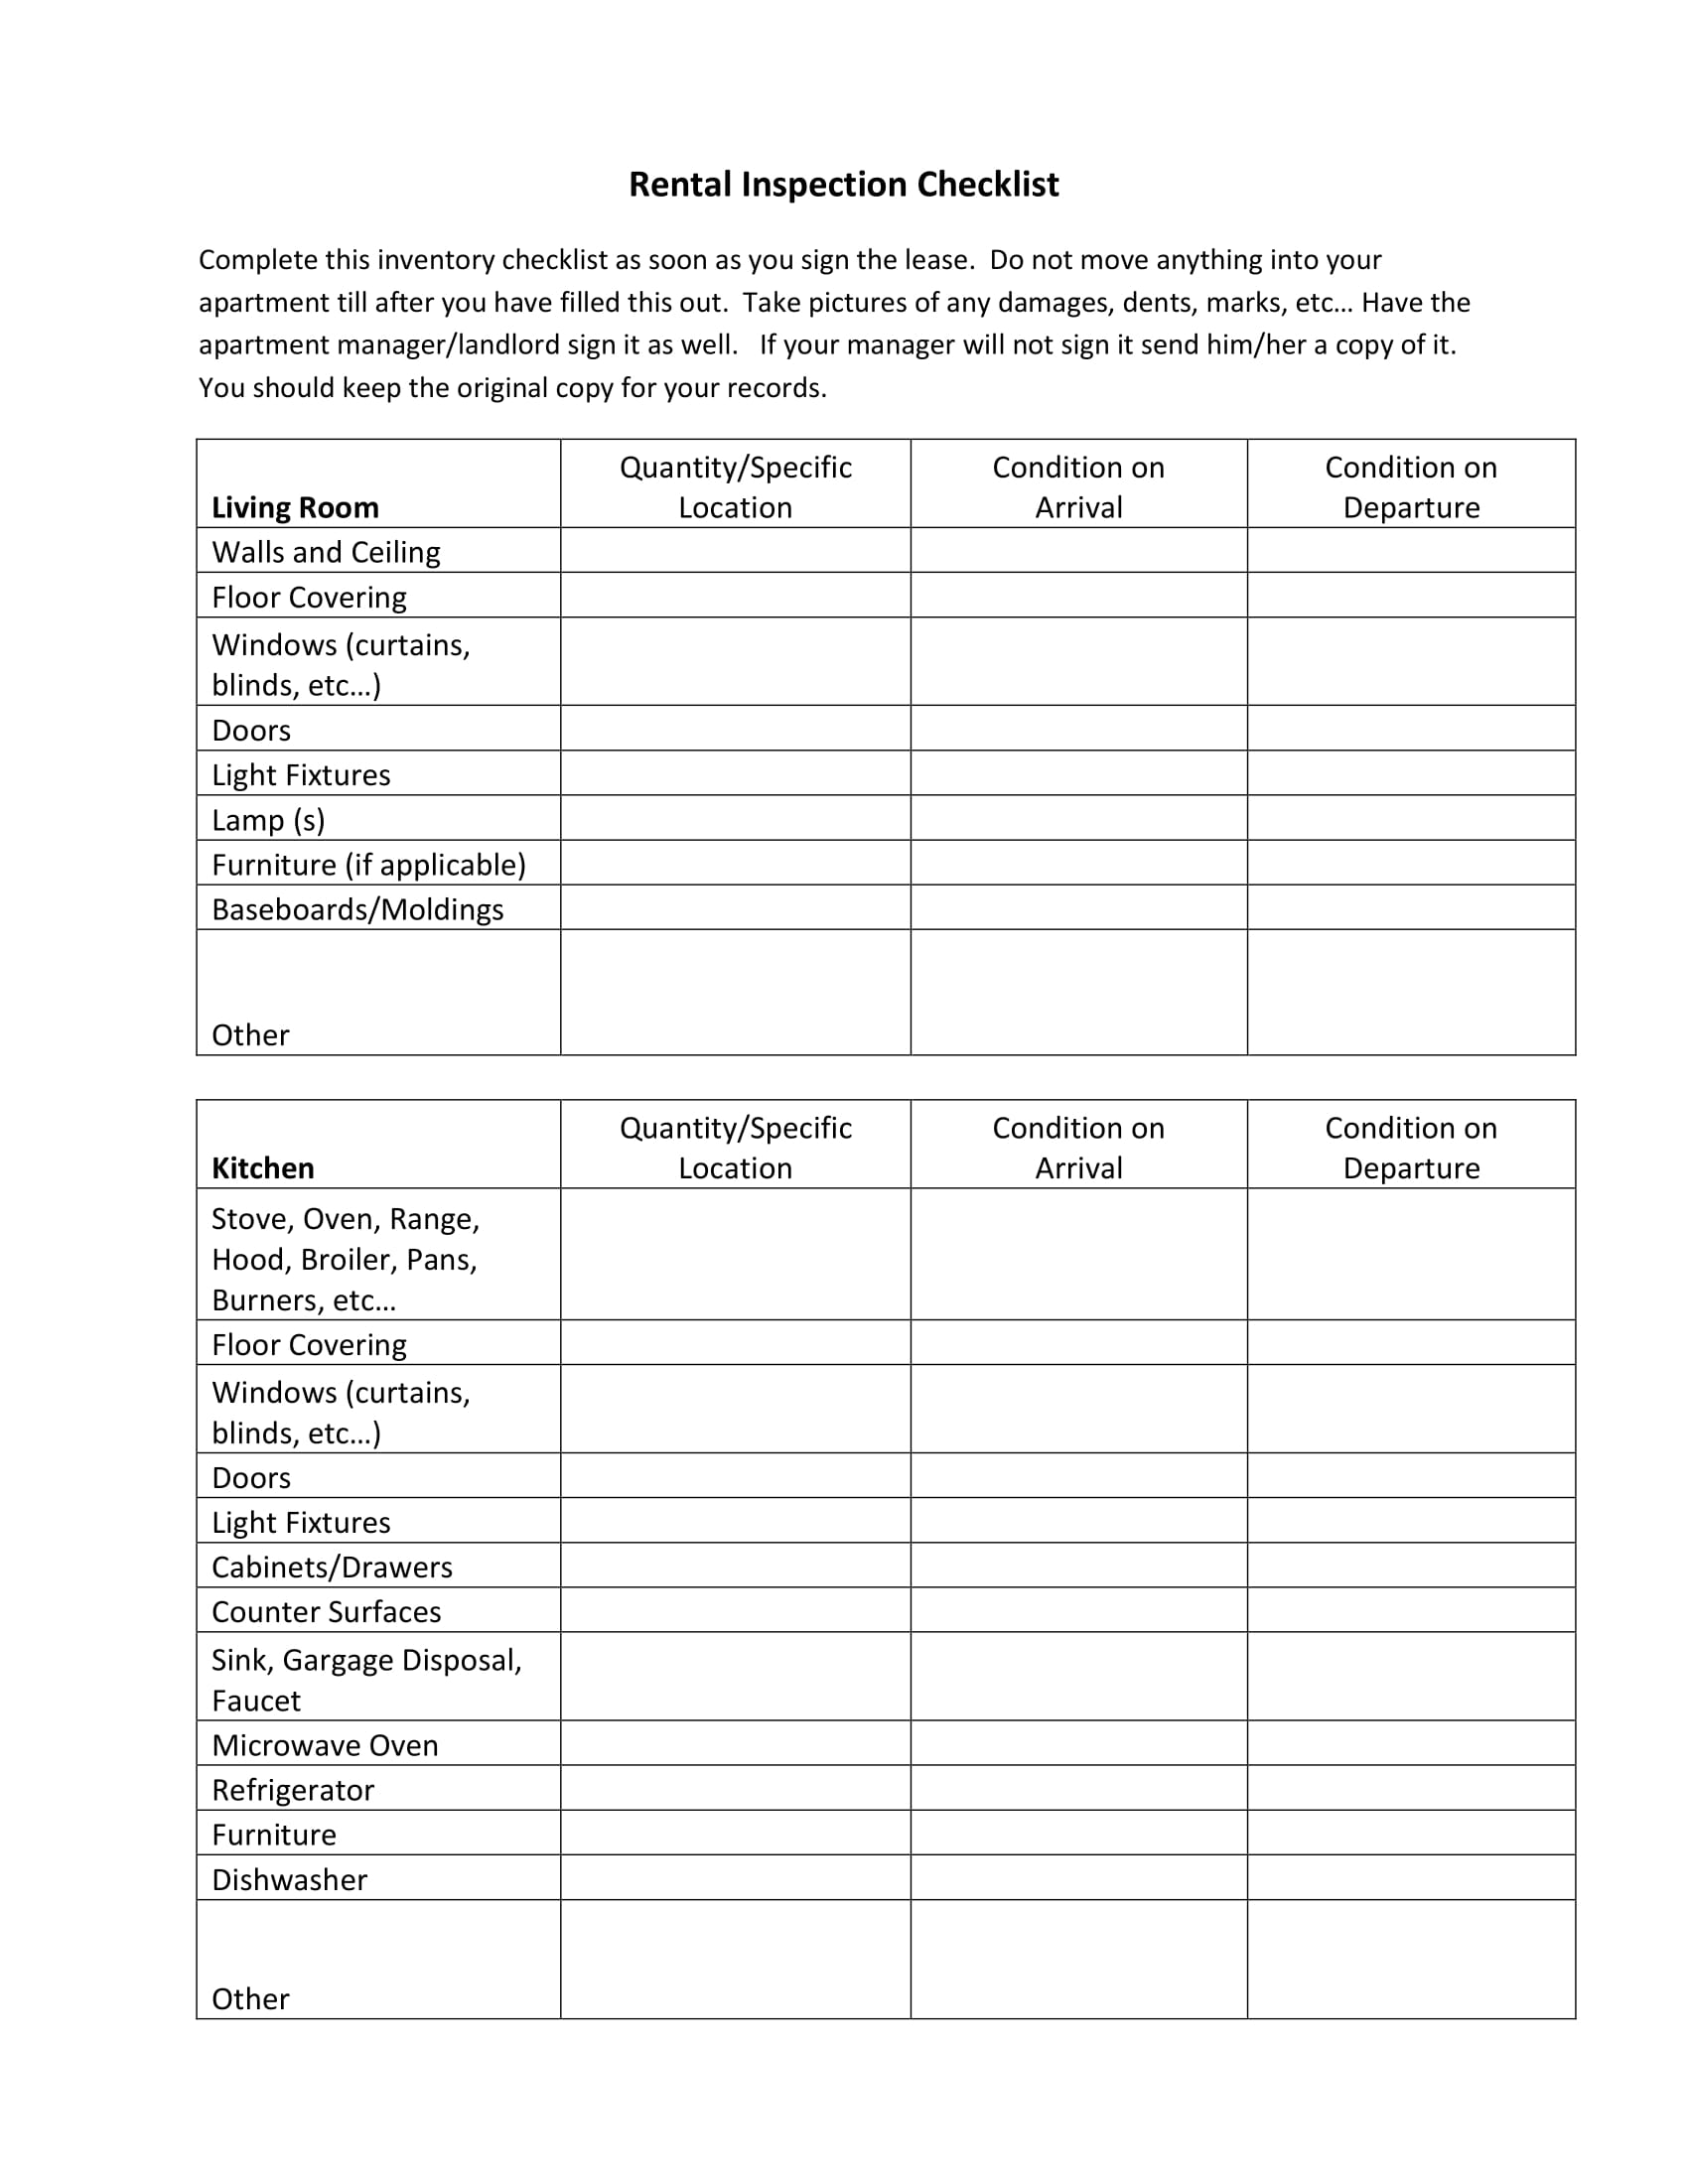 Tenants documentation checklist